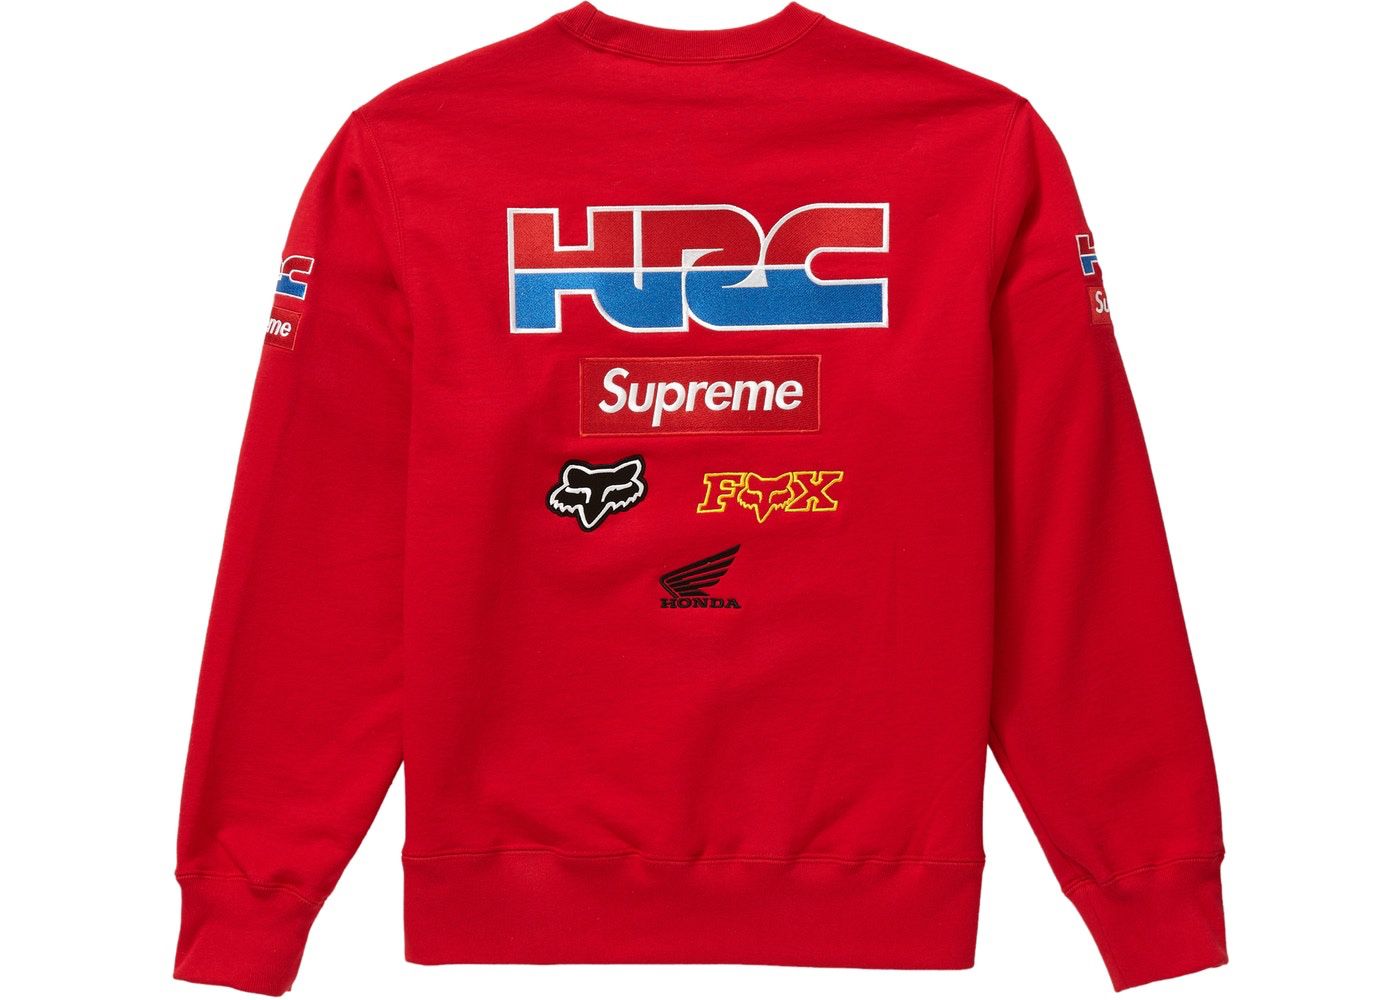 Supreme X Honda Racing company crewneck size large red